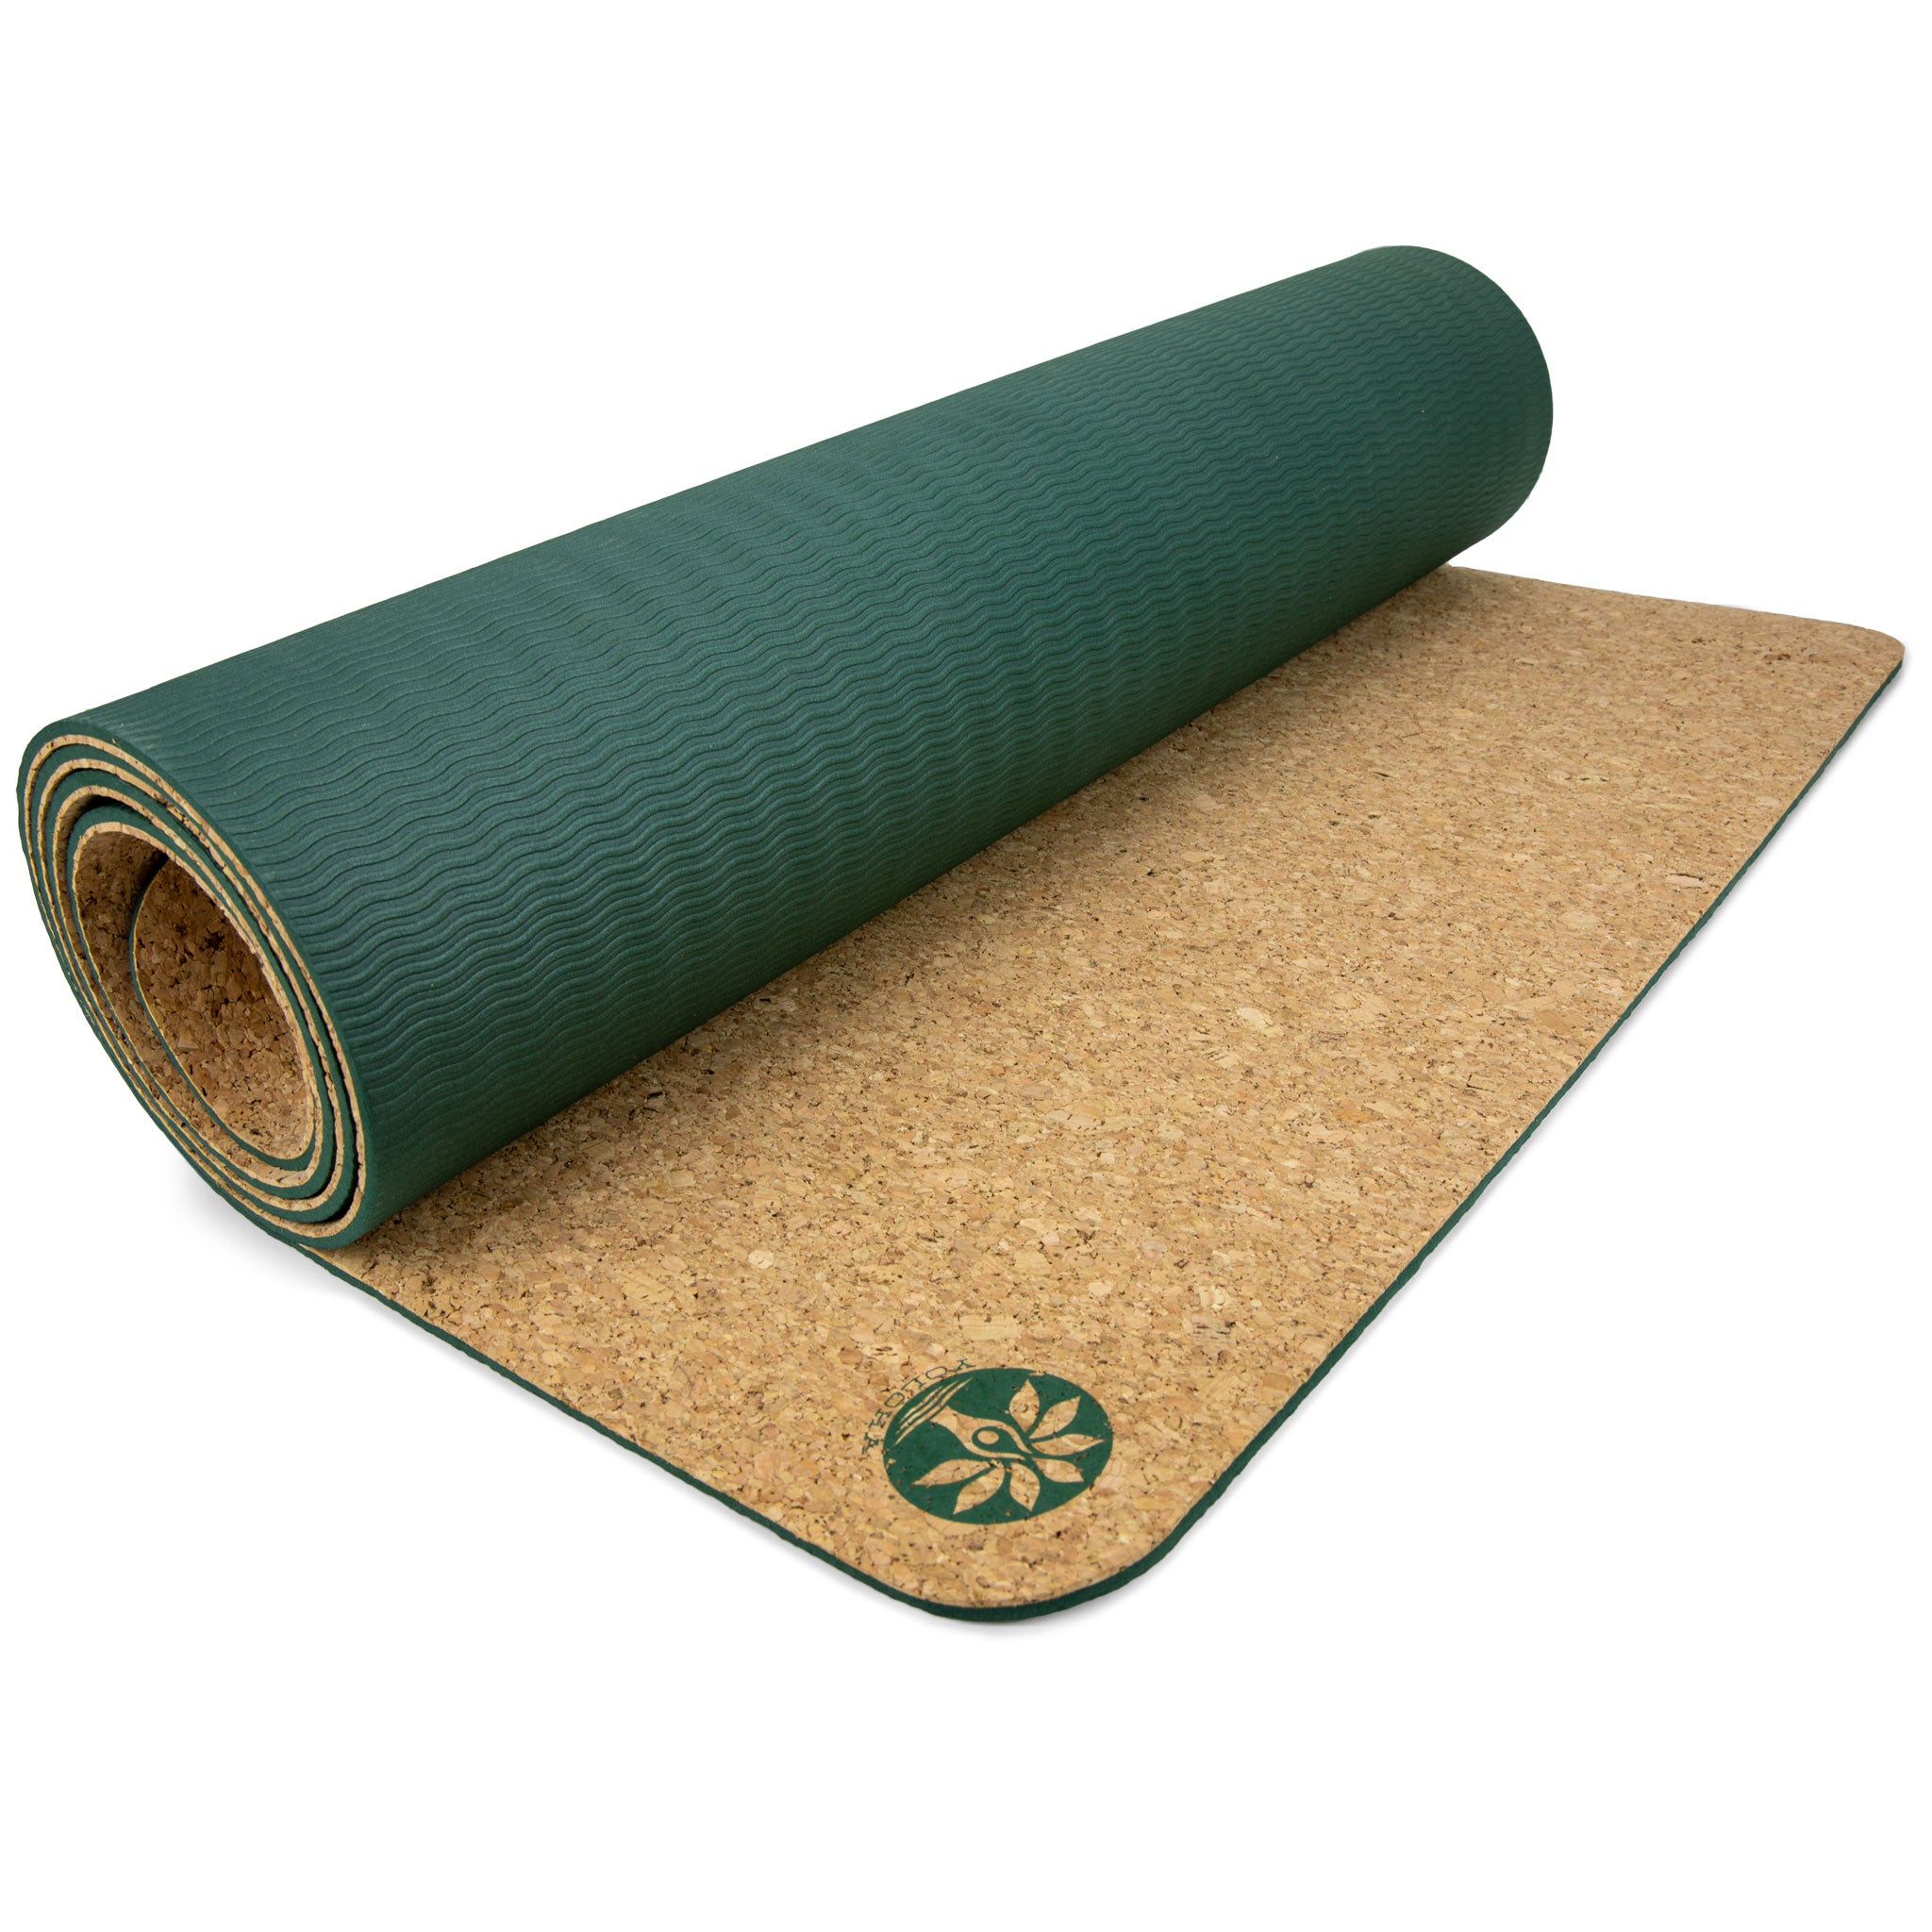 Luxury Cork Yoga Mat- Hot Yoga Mat 5mm with Carrying Strap- Bikram Yoga Mat, Best Yoga Mats for Fitness & Pilates- Eco Friendly Yoga Mat Cork- Cork